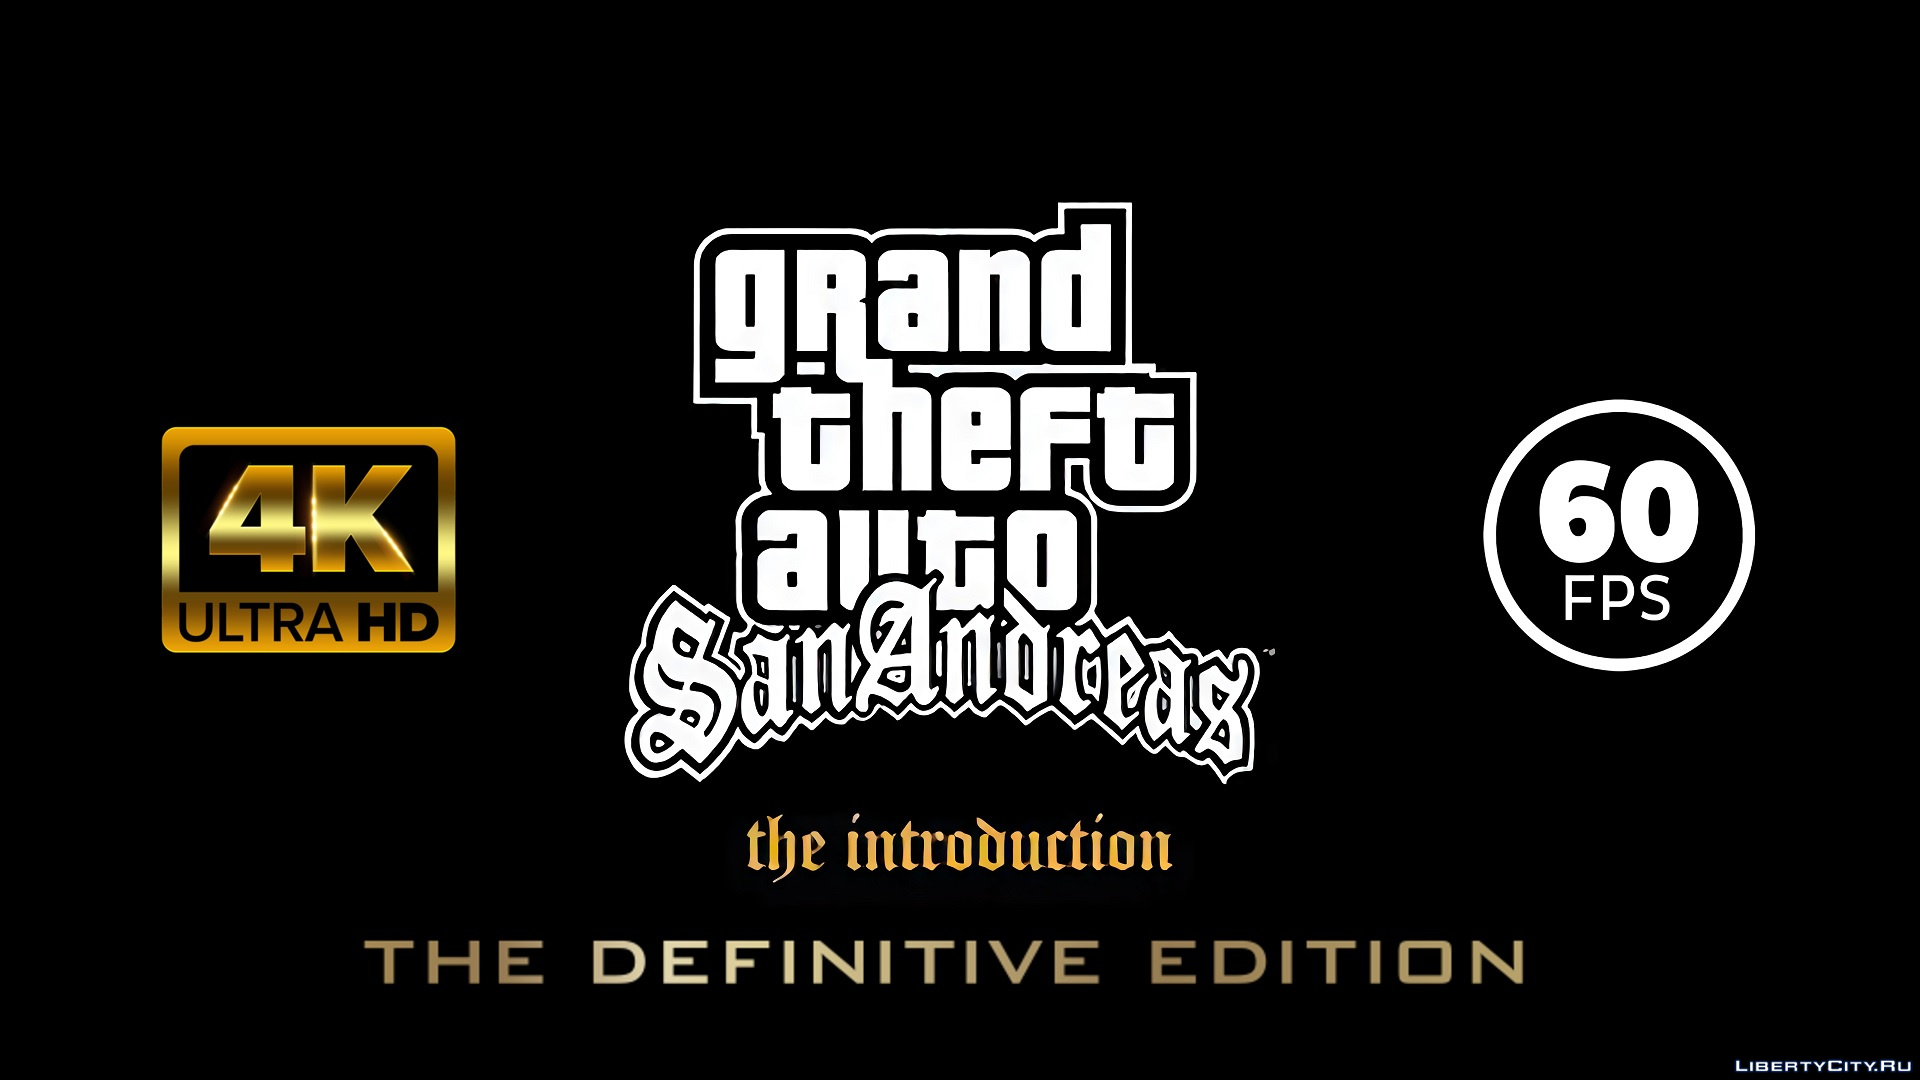 Сан андреас дефинитив эдишн. GTA San Andreas Definitive Edition. Grand Theft auto: San Andreas – the Definitive Edition. ГТА са Дефинитив эдишн. GTA San Andreas Definitive Edition 2021.